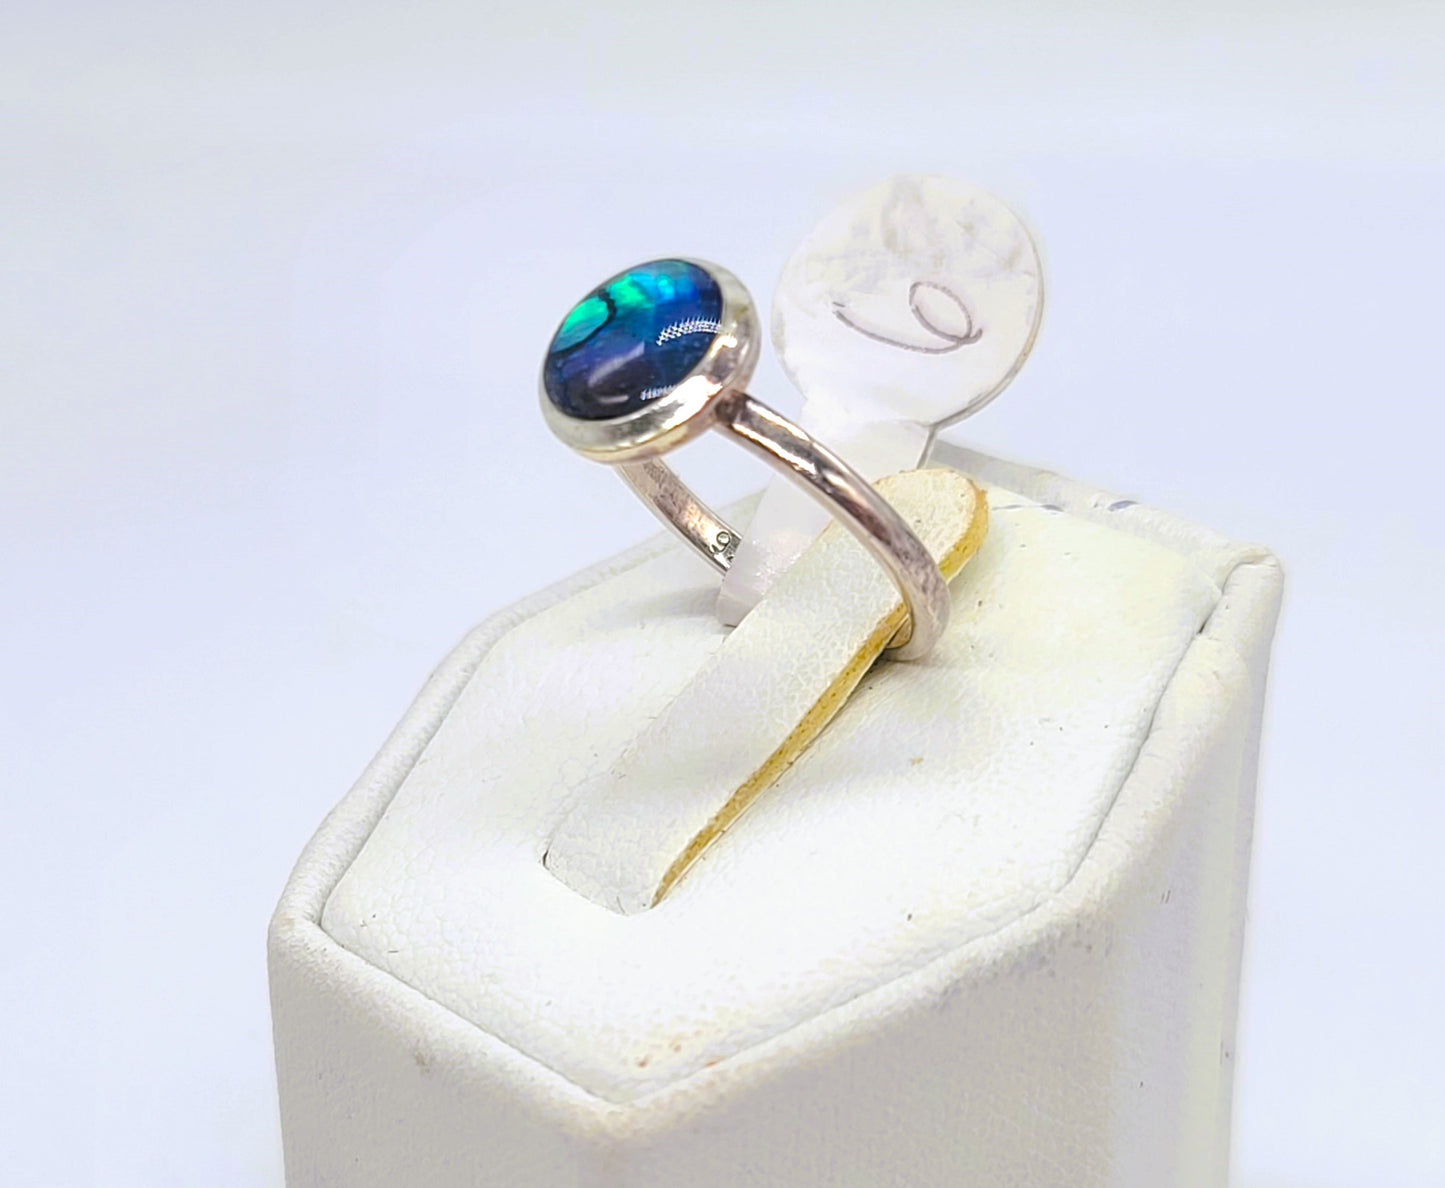 925 Sterling Silver Natural Blue Abalone / Paua Seashell Ring